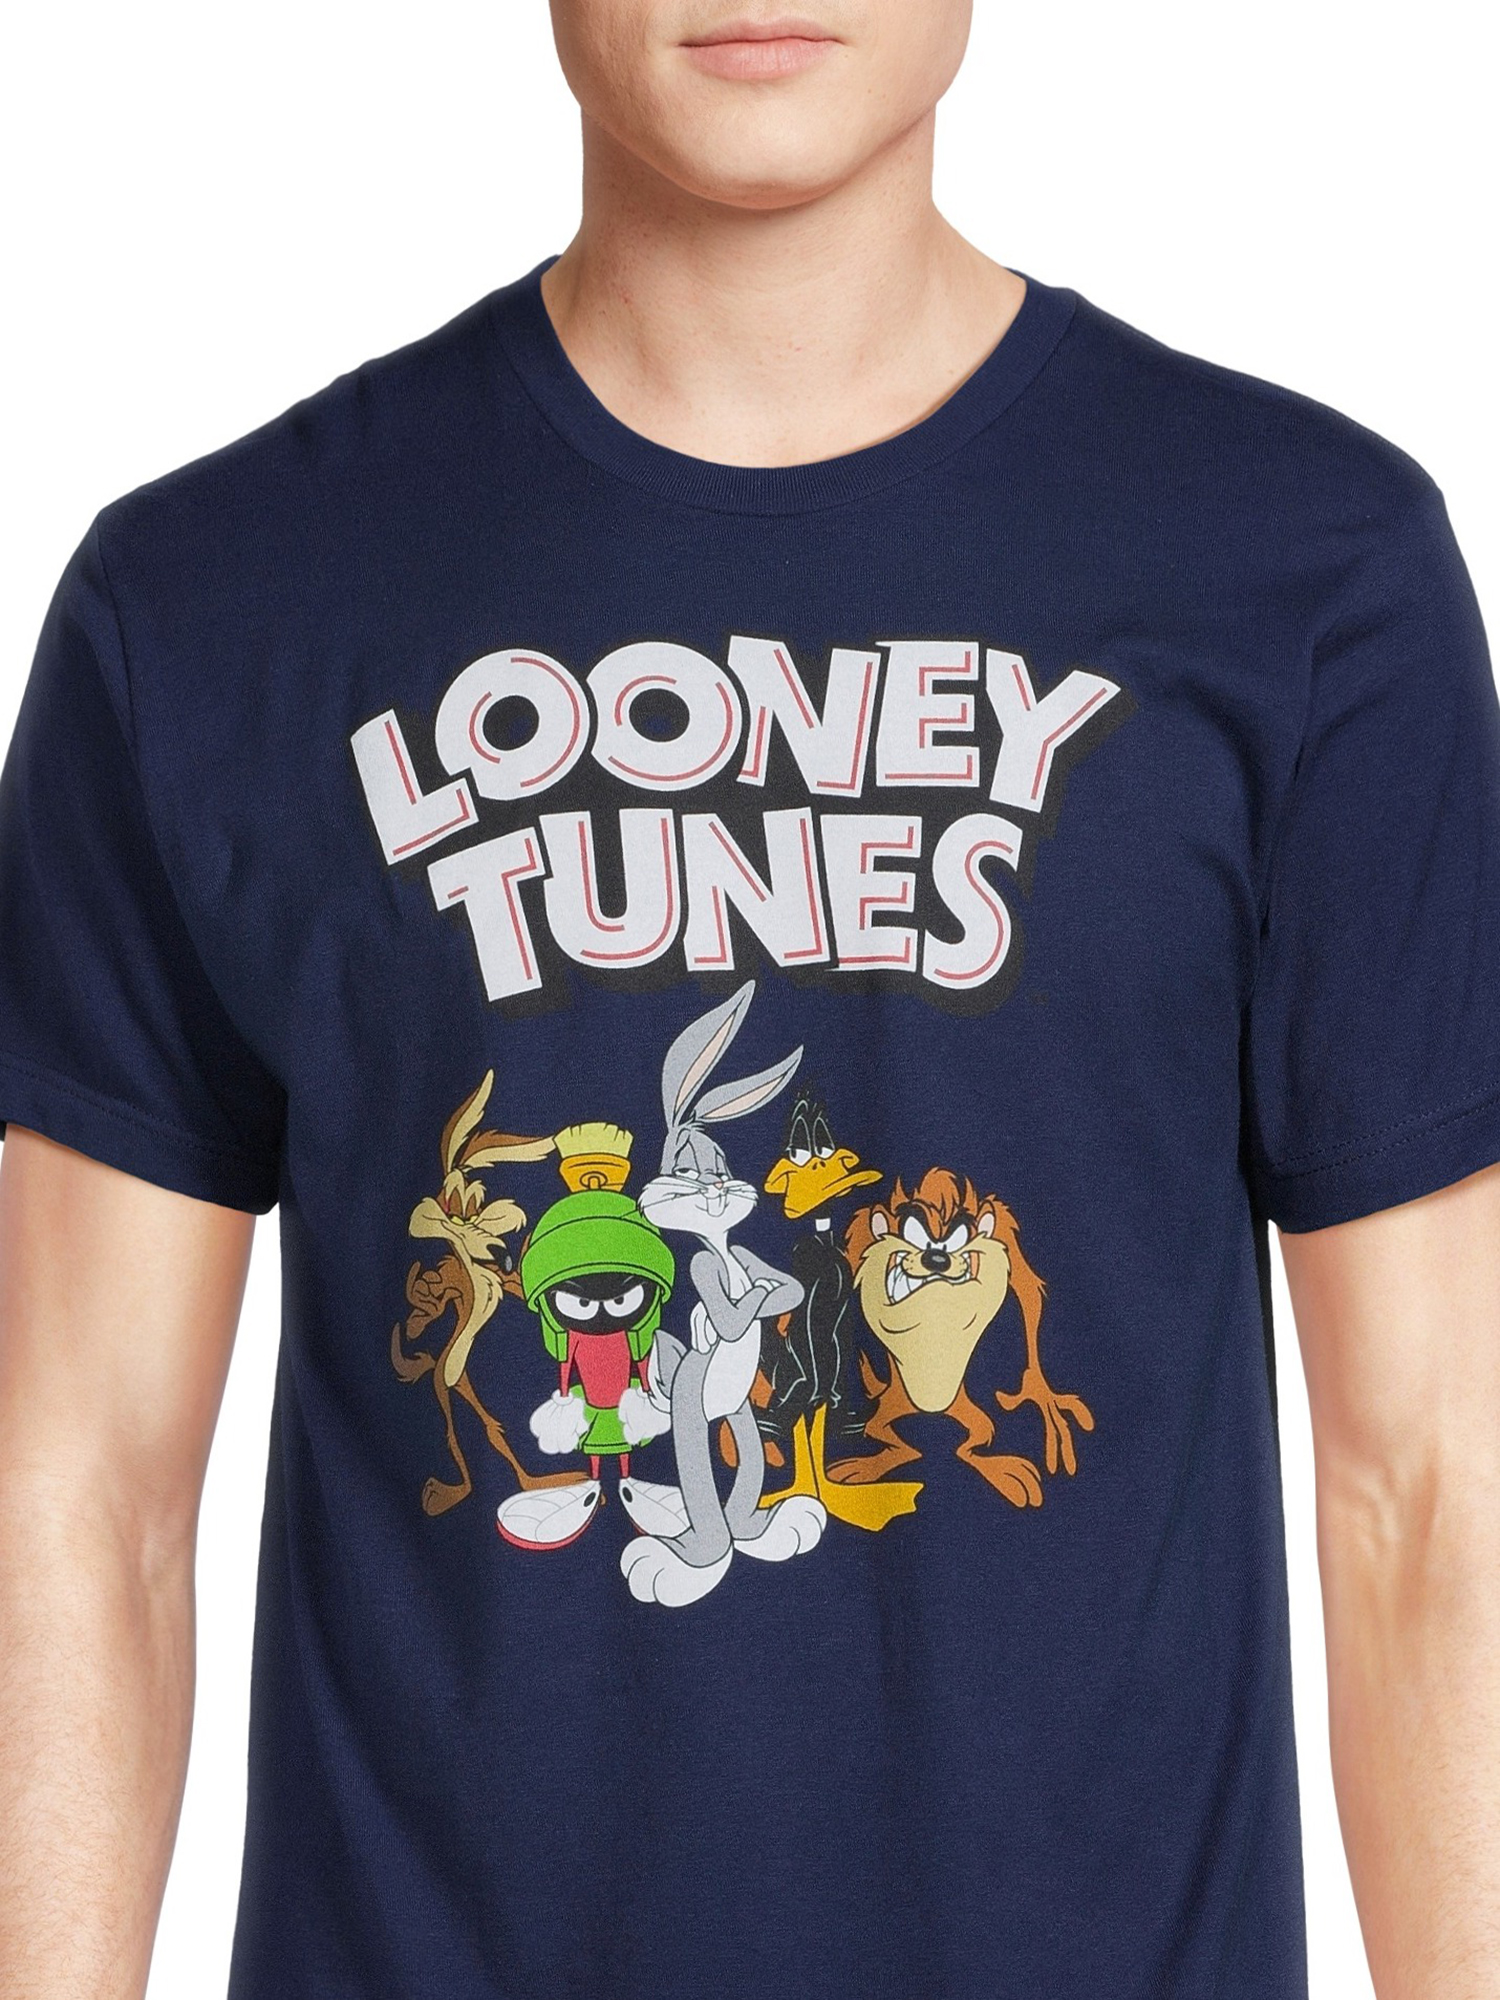 Looney Tunes Men's & Big Men's Graphic Tee Shirts, 2-Pack, S-3XL ...